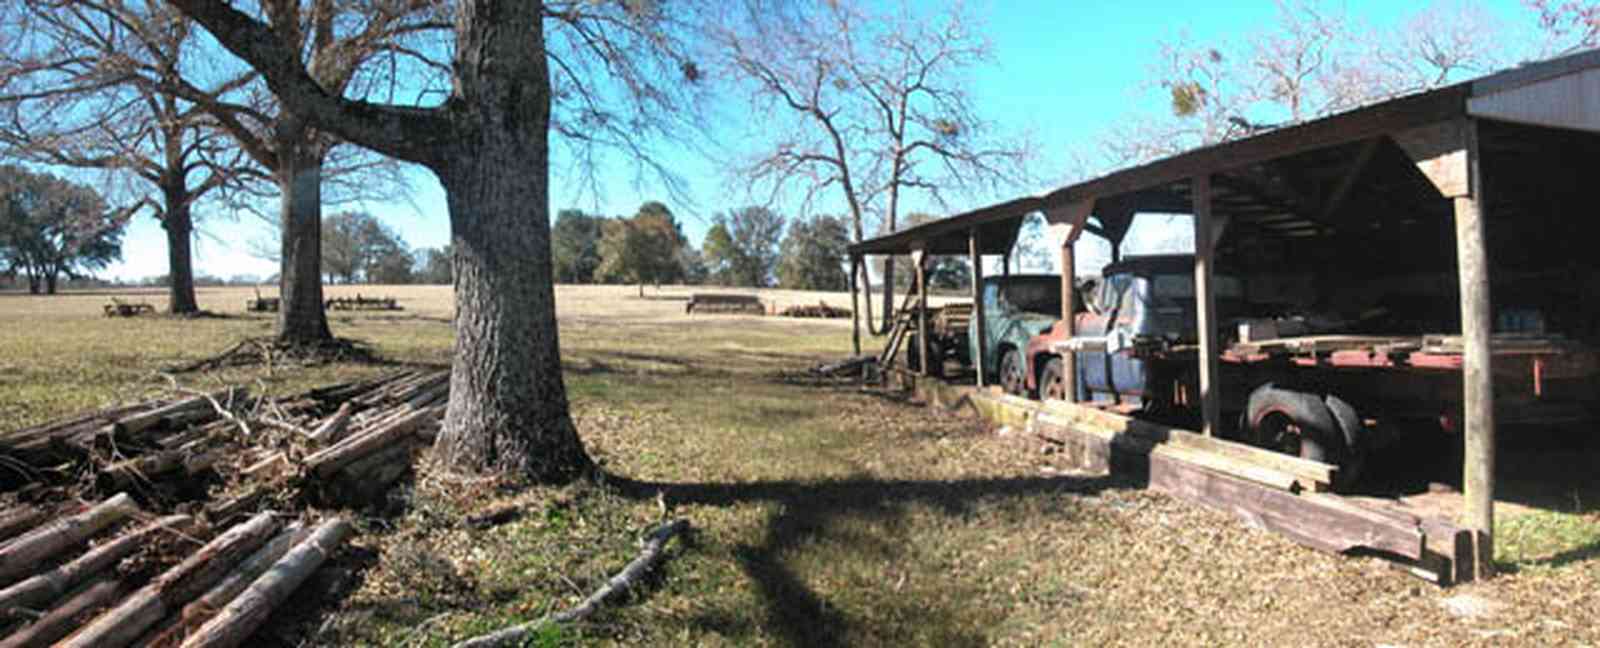 Allentown:-Mathews-Equipment-Barn_01.jpg:  pasture, farm, old trucks, fencing equipment, barn, fence posts